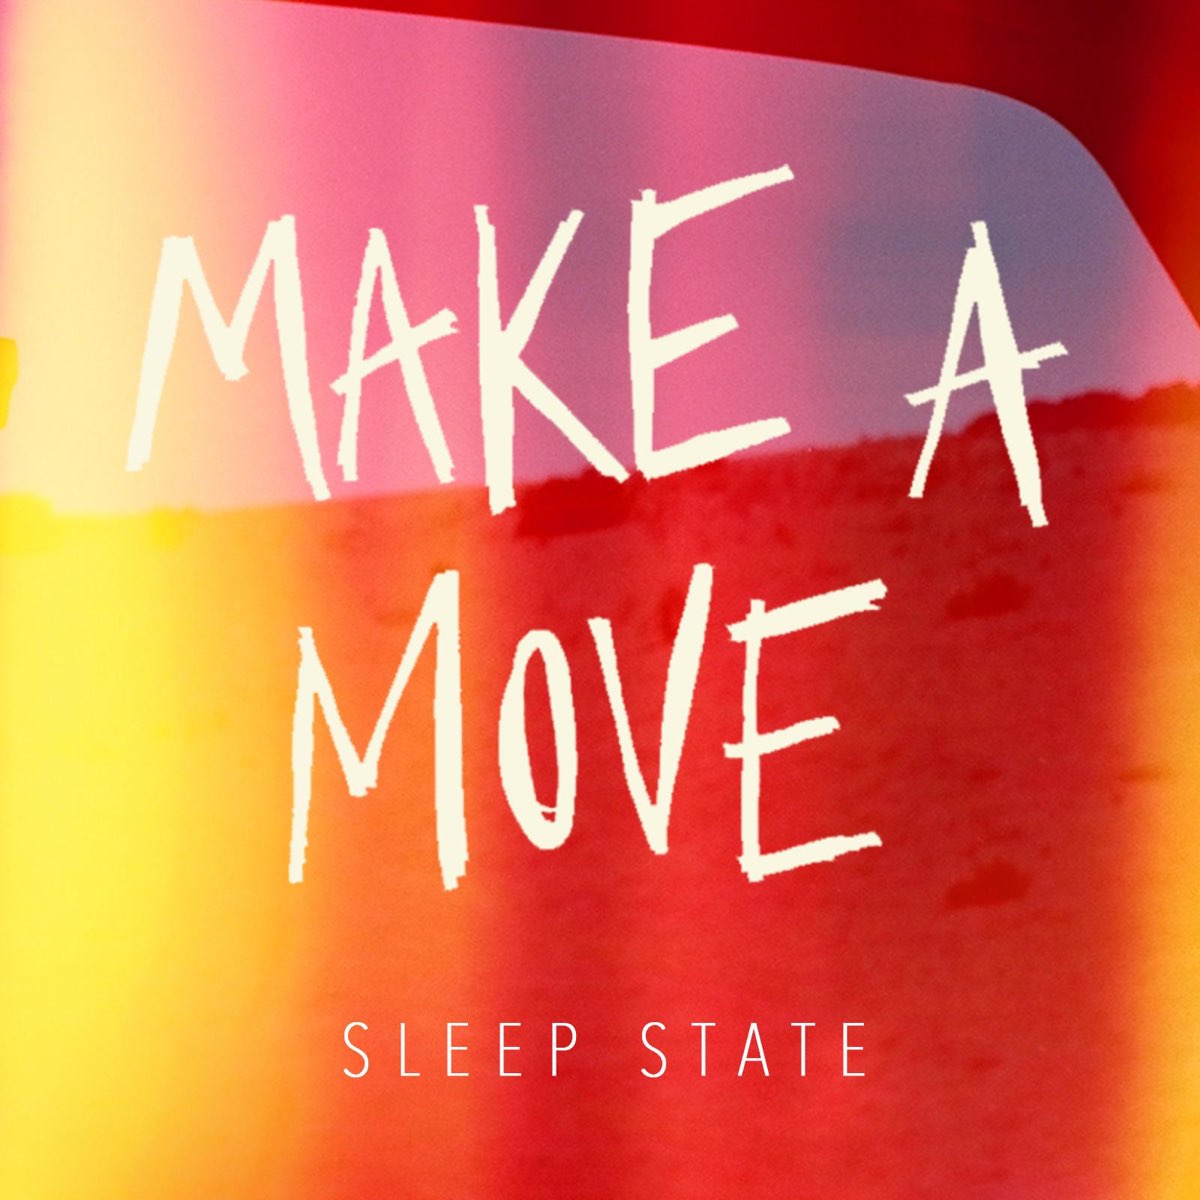 Make a move. Made a move on me. Make you state